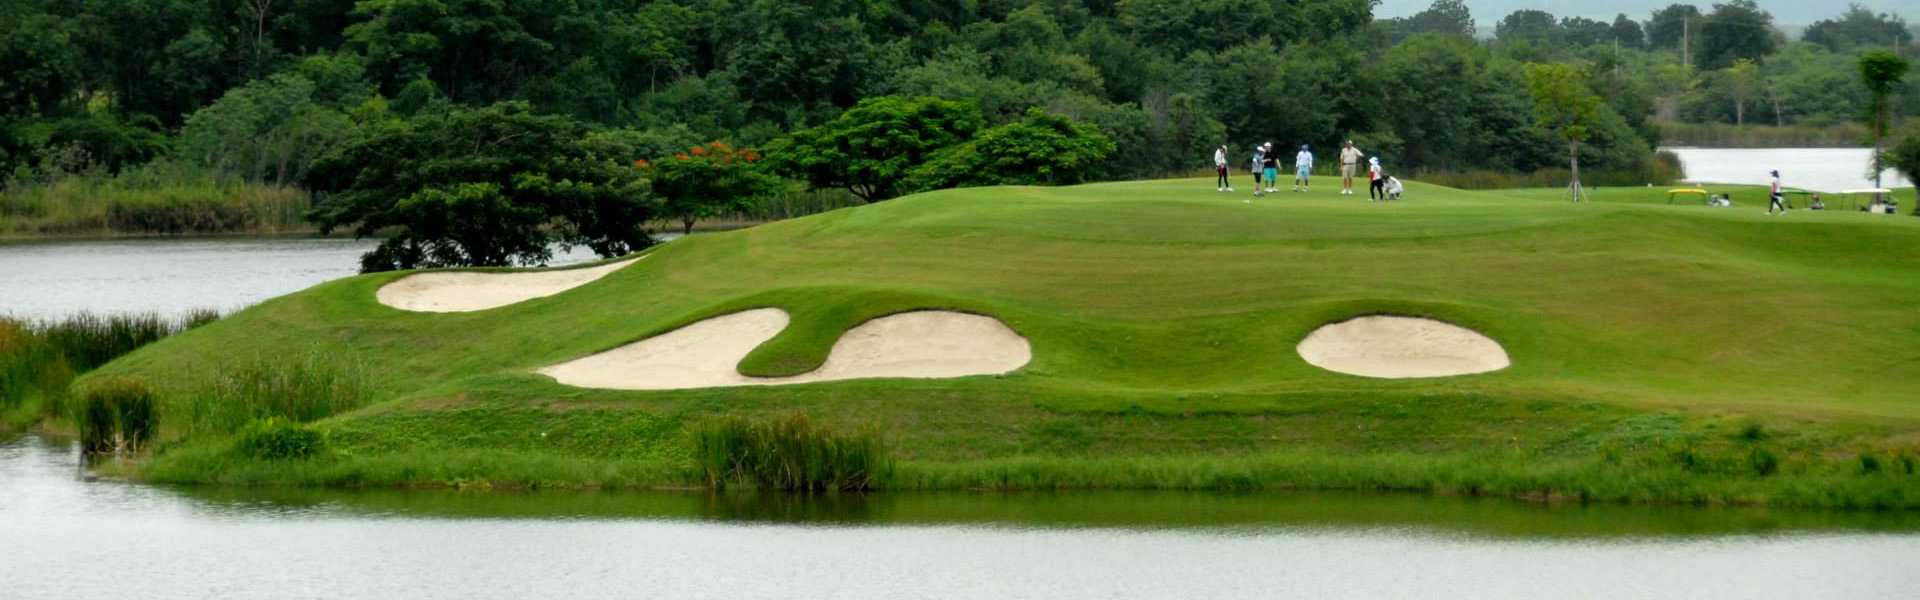 Grand Prix Golf Club Kanchanaburi 